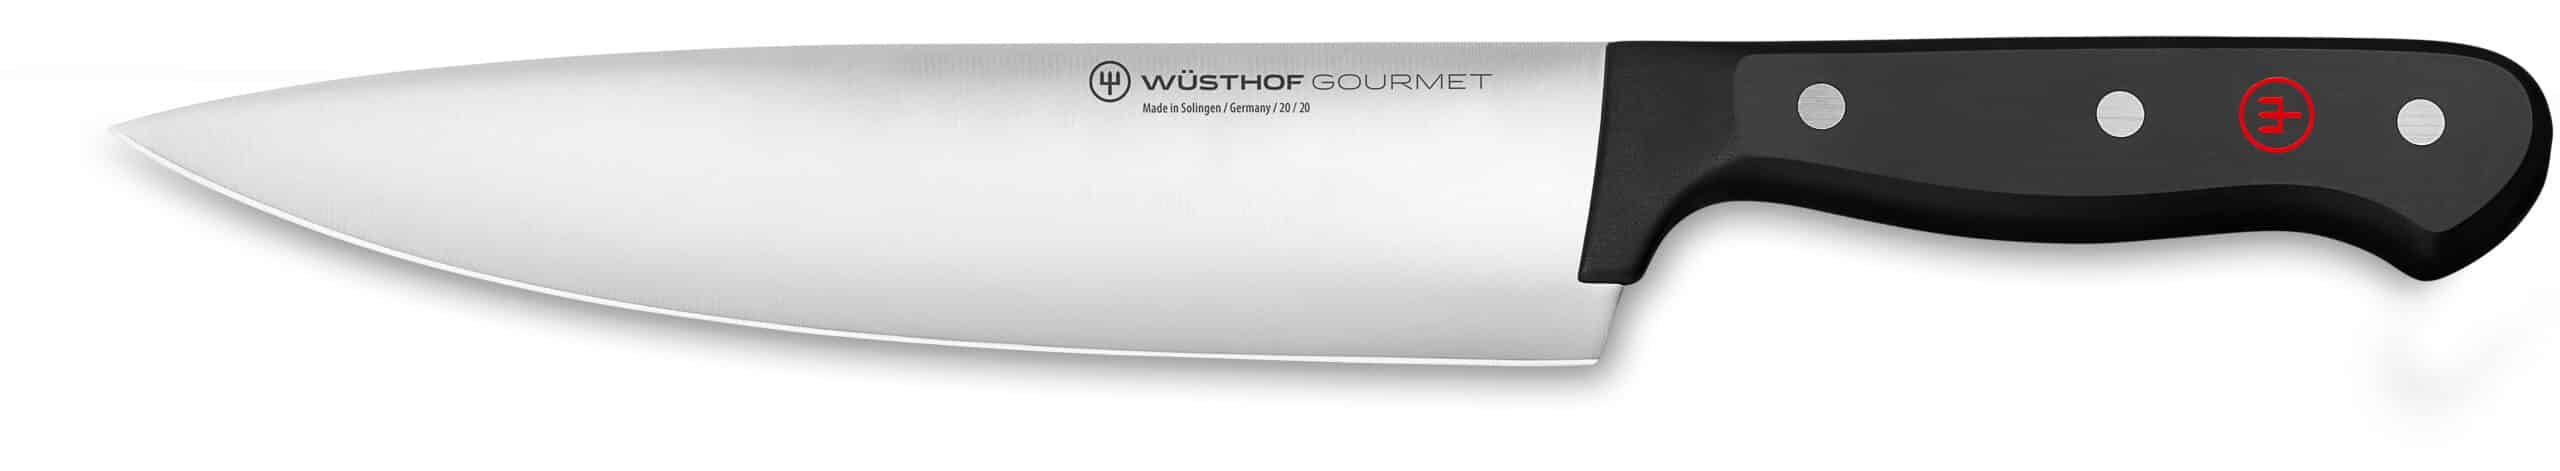 Wusthof Gourmet Cook's Knife 20cm